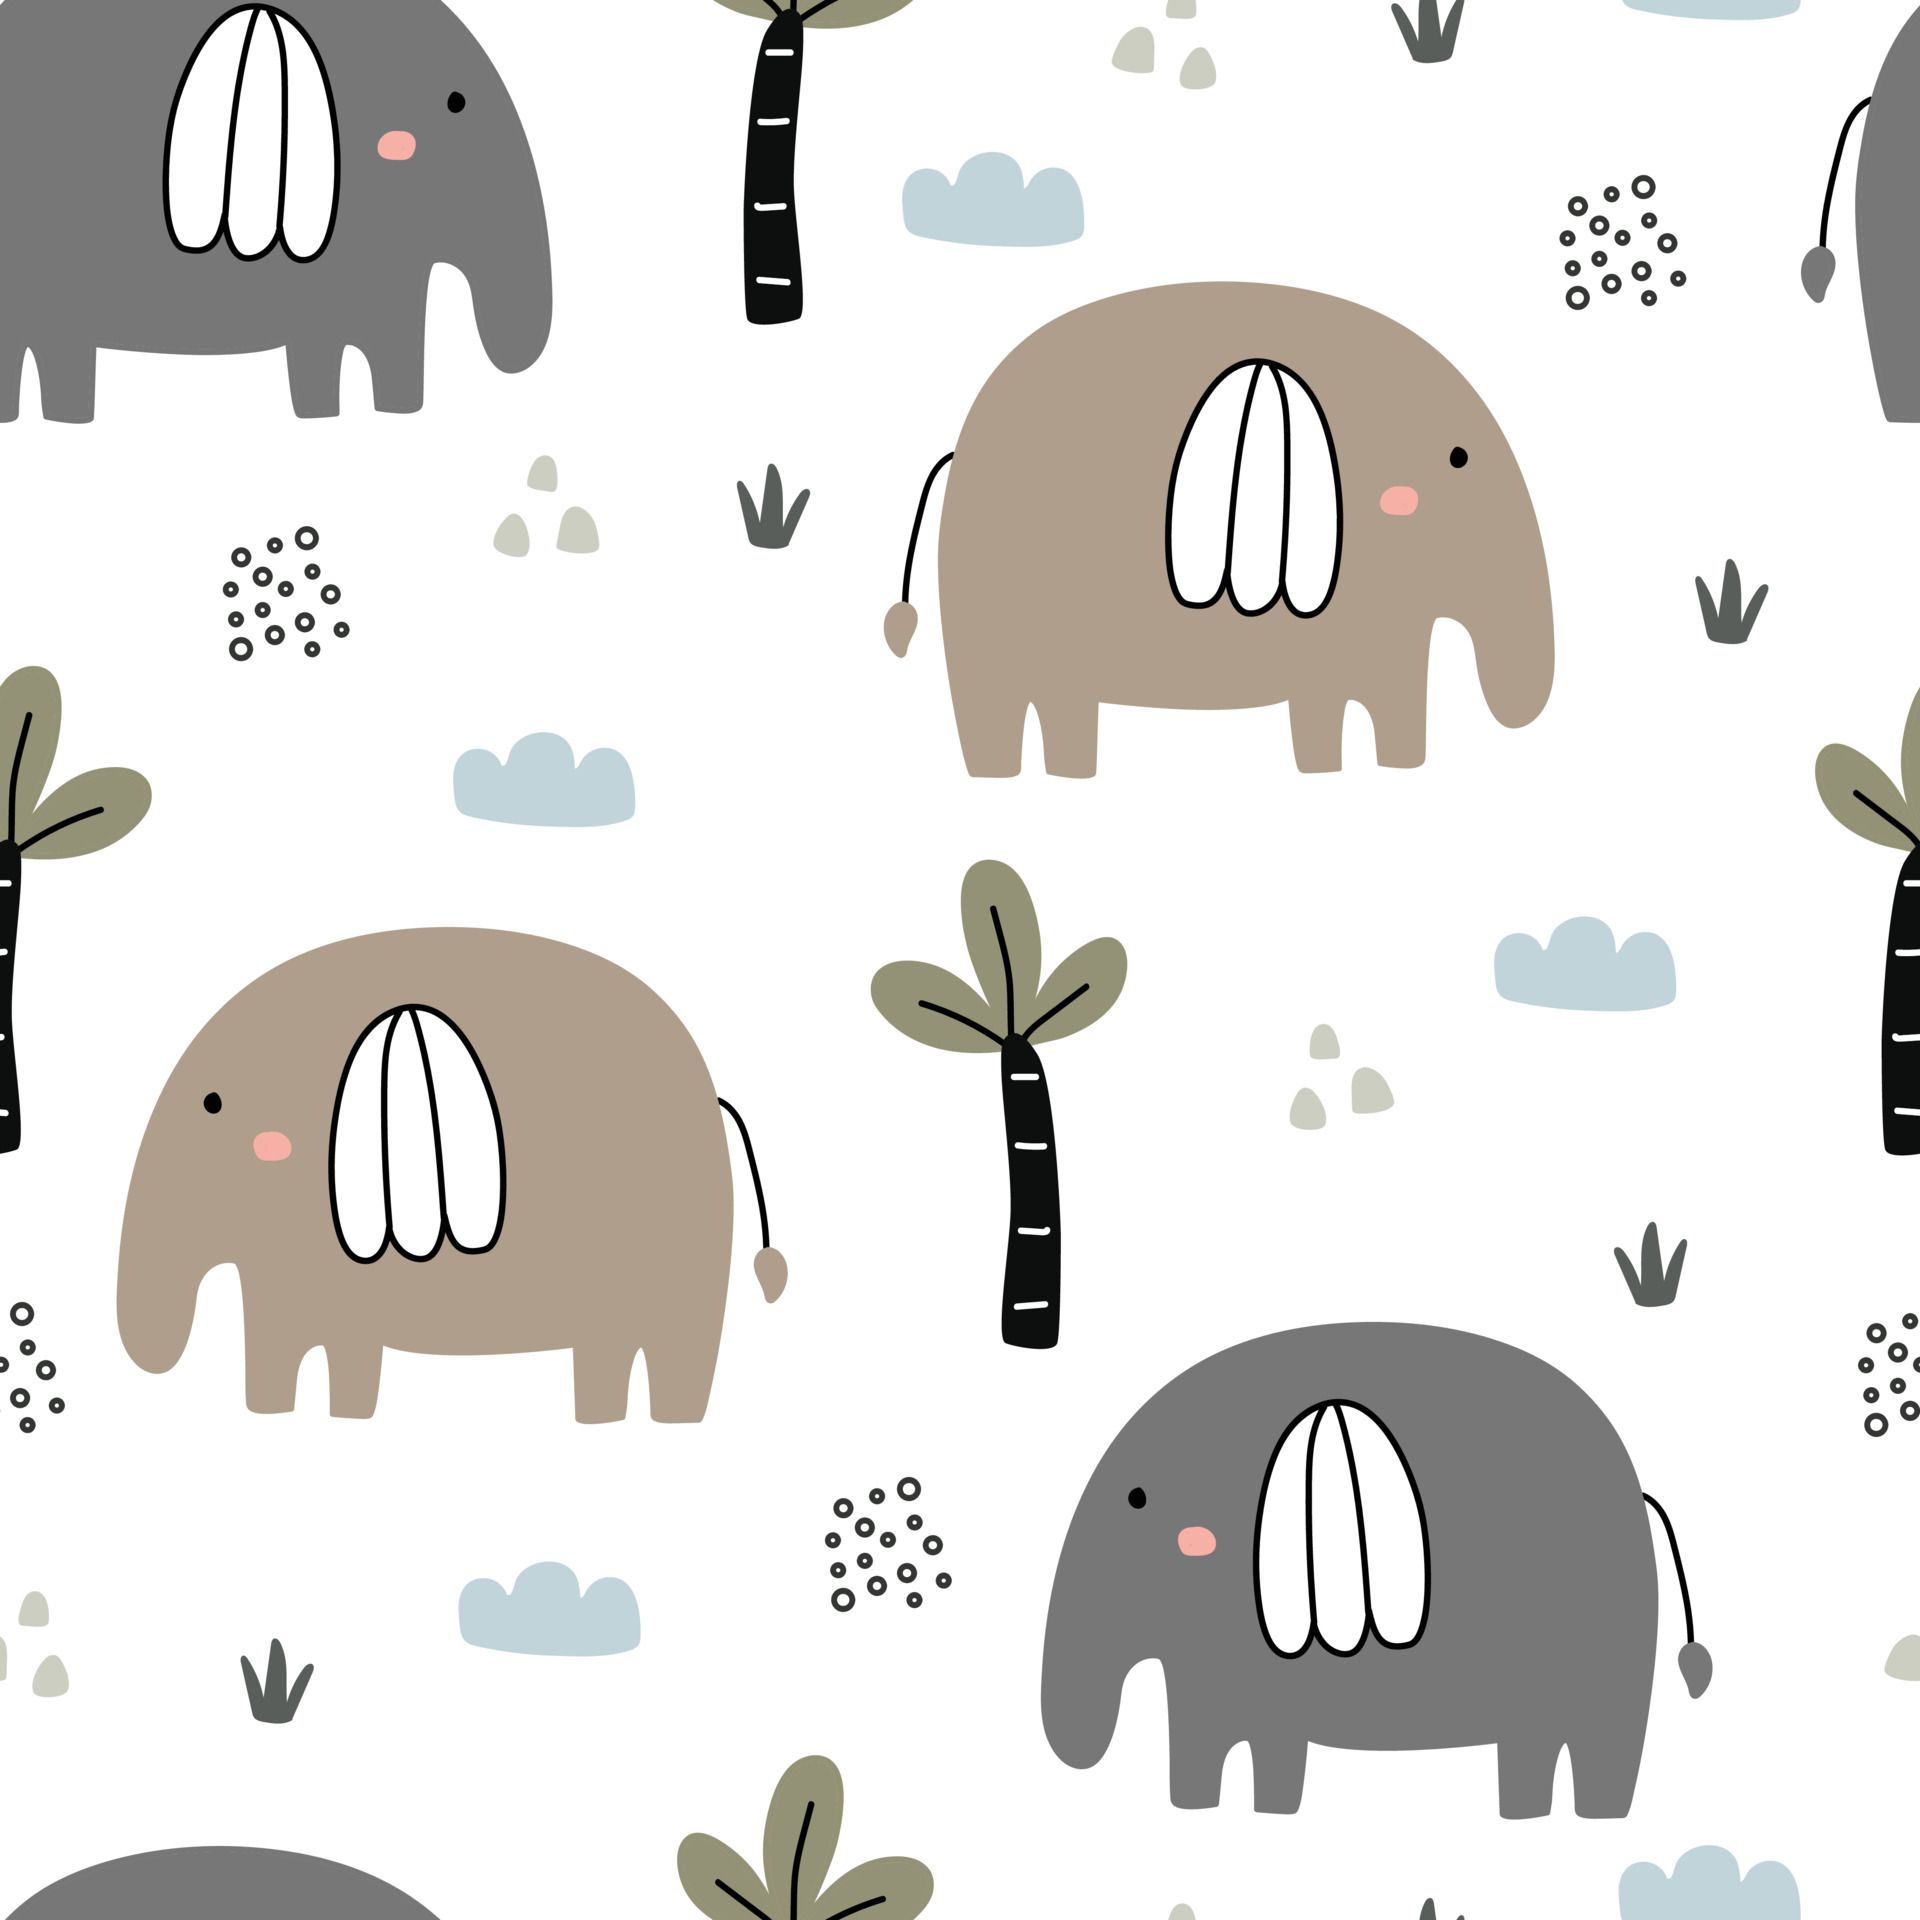 A seamless pattern with elephants and palm trees - Elephant